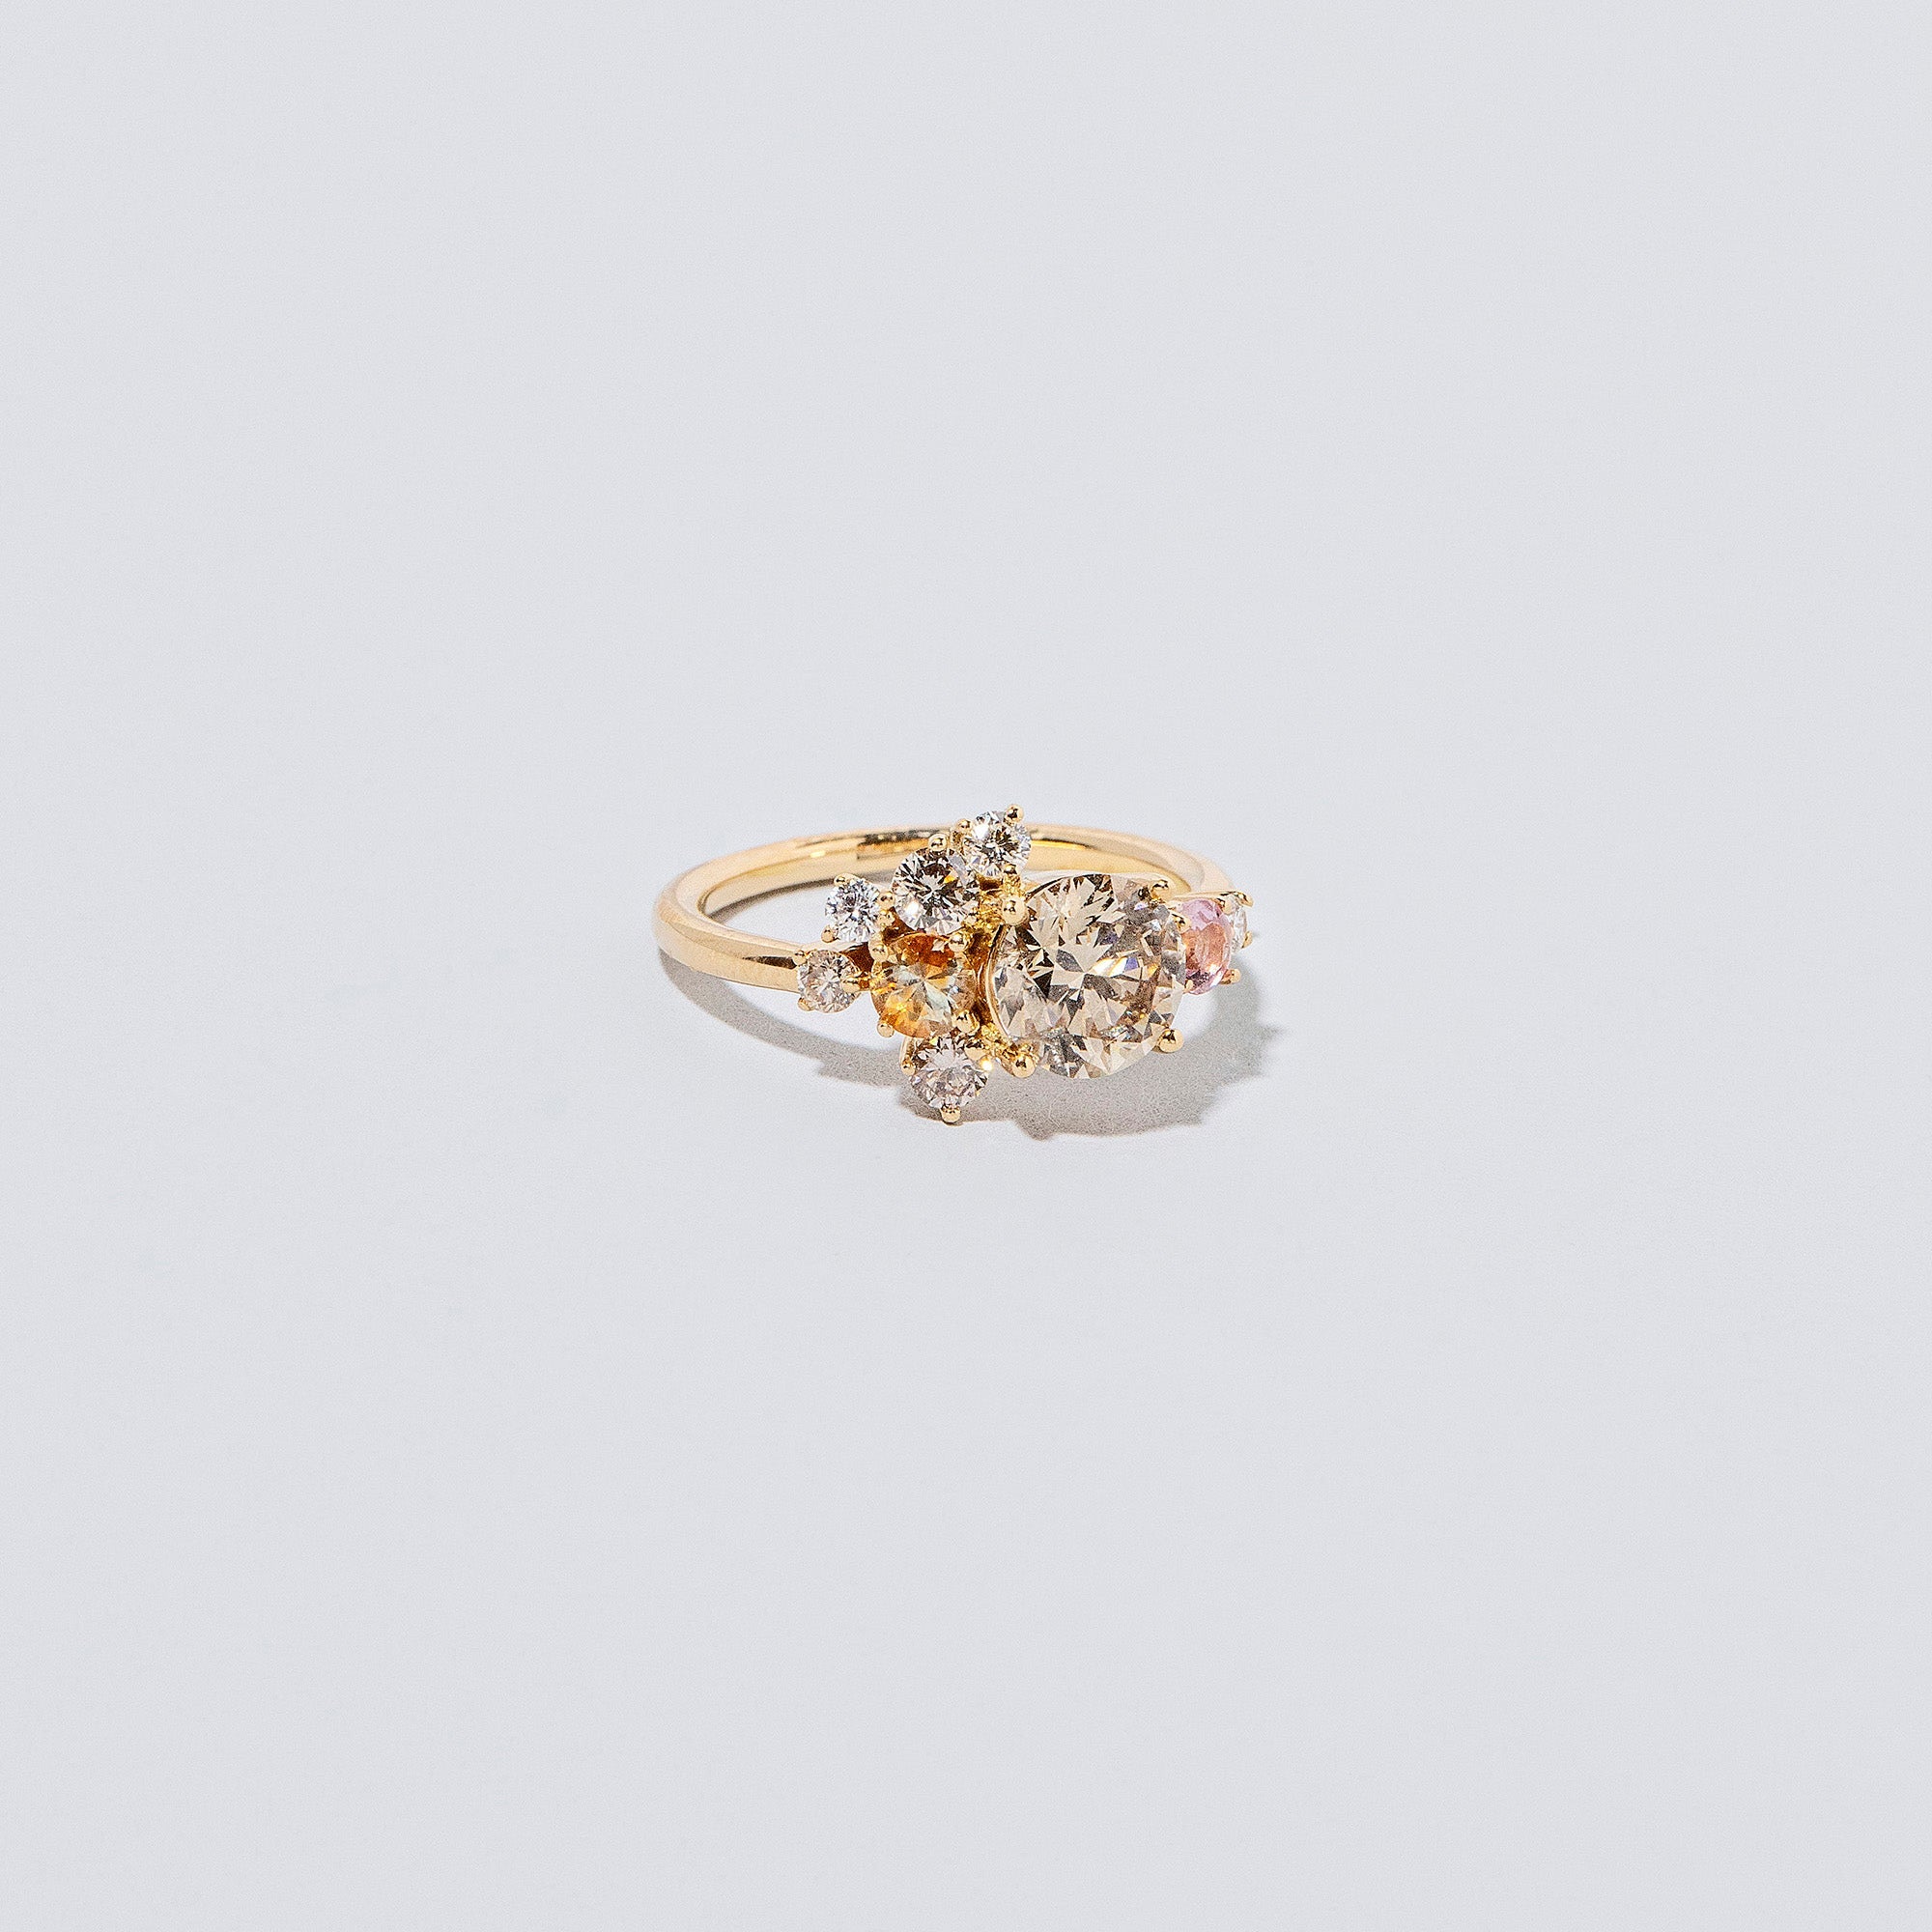 product_details::Vega Ring - Champagne Diamond on light color background.